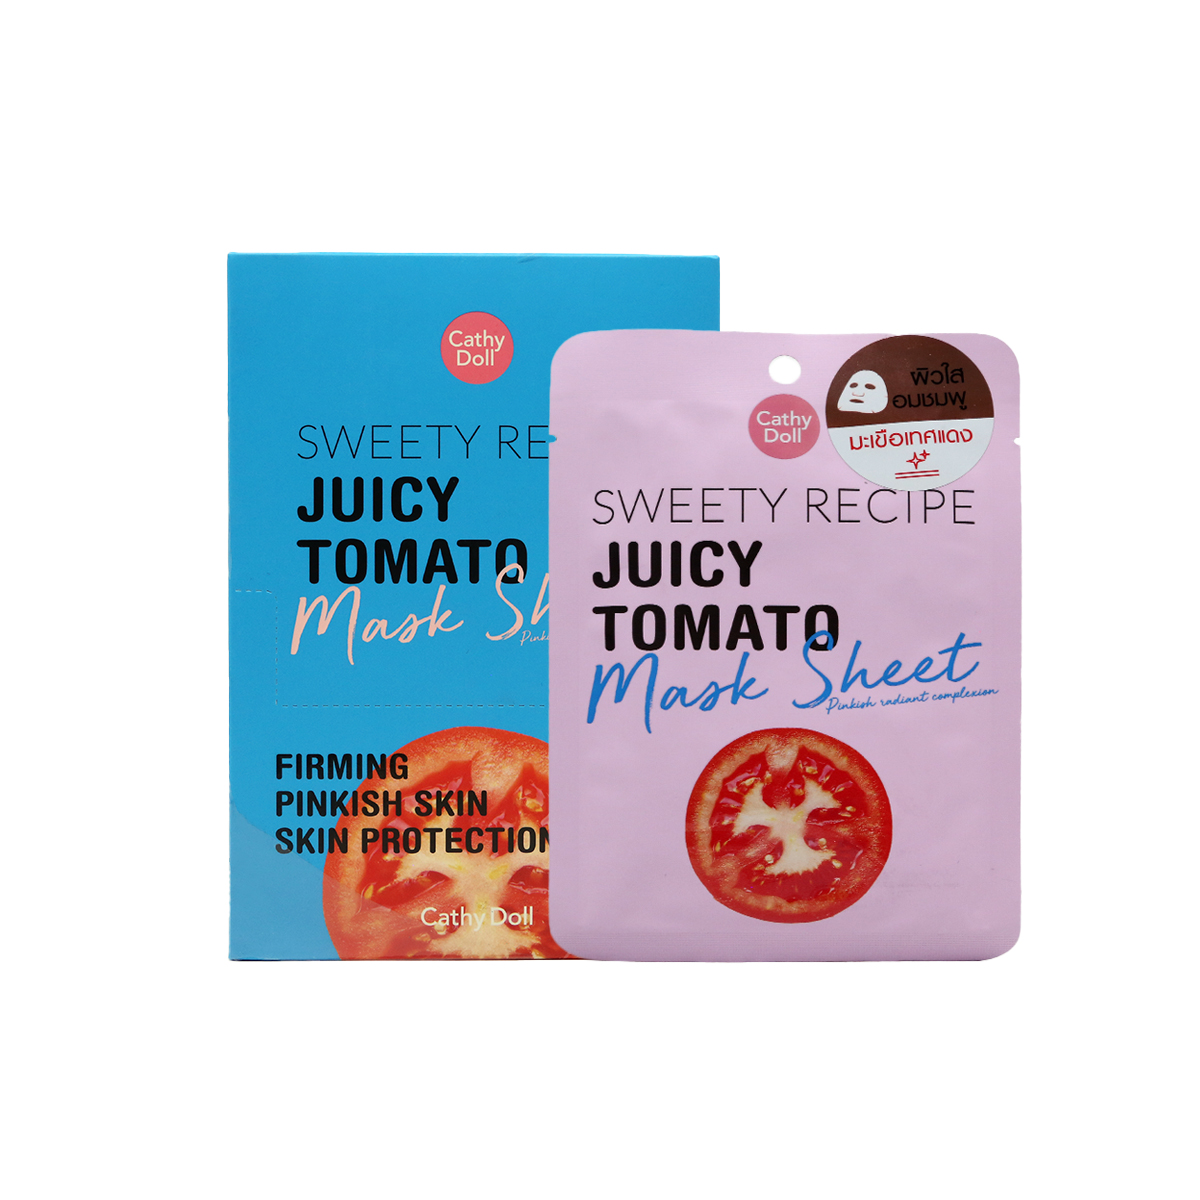 21-8809396170104-Cathy Doll Sweet Recipe Mask Sheet 25GX10 Juicy Tomato 1